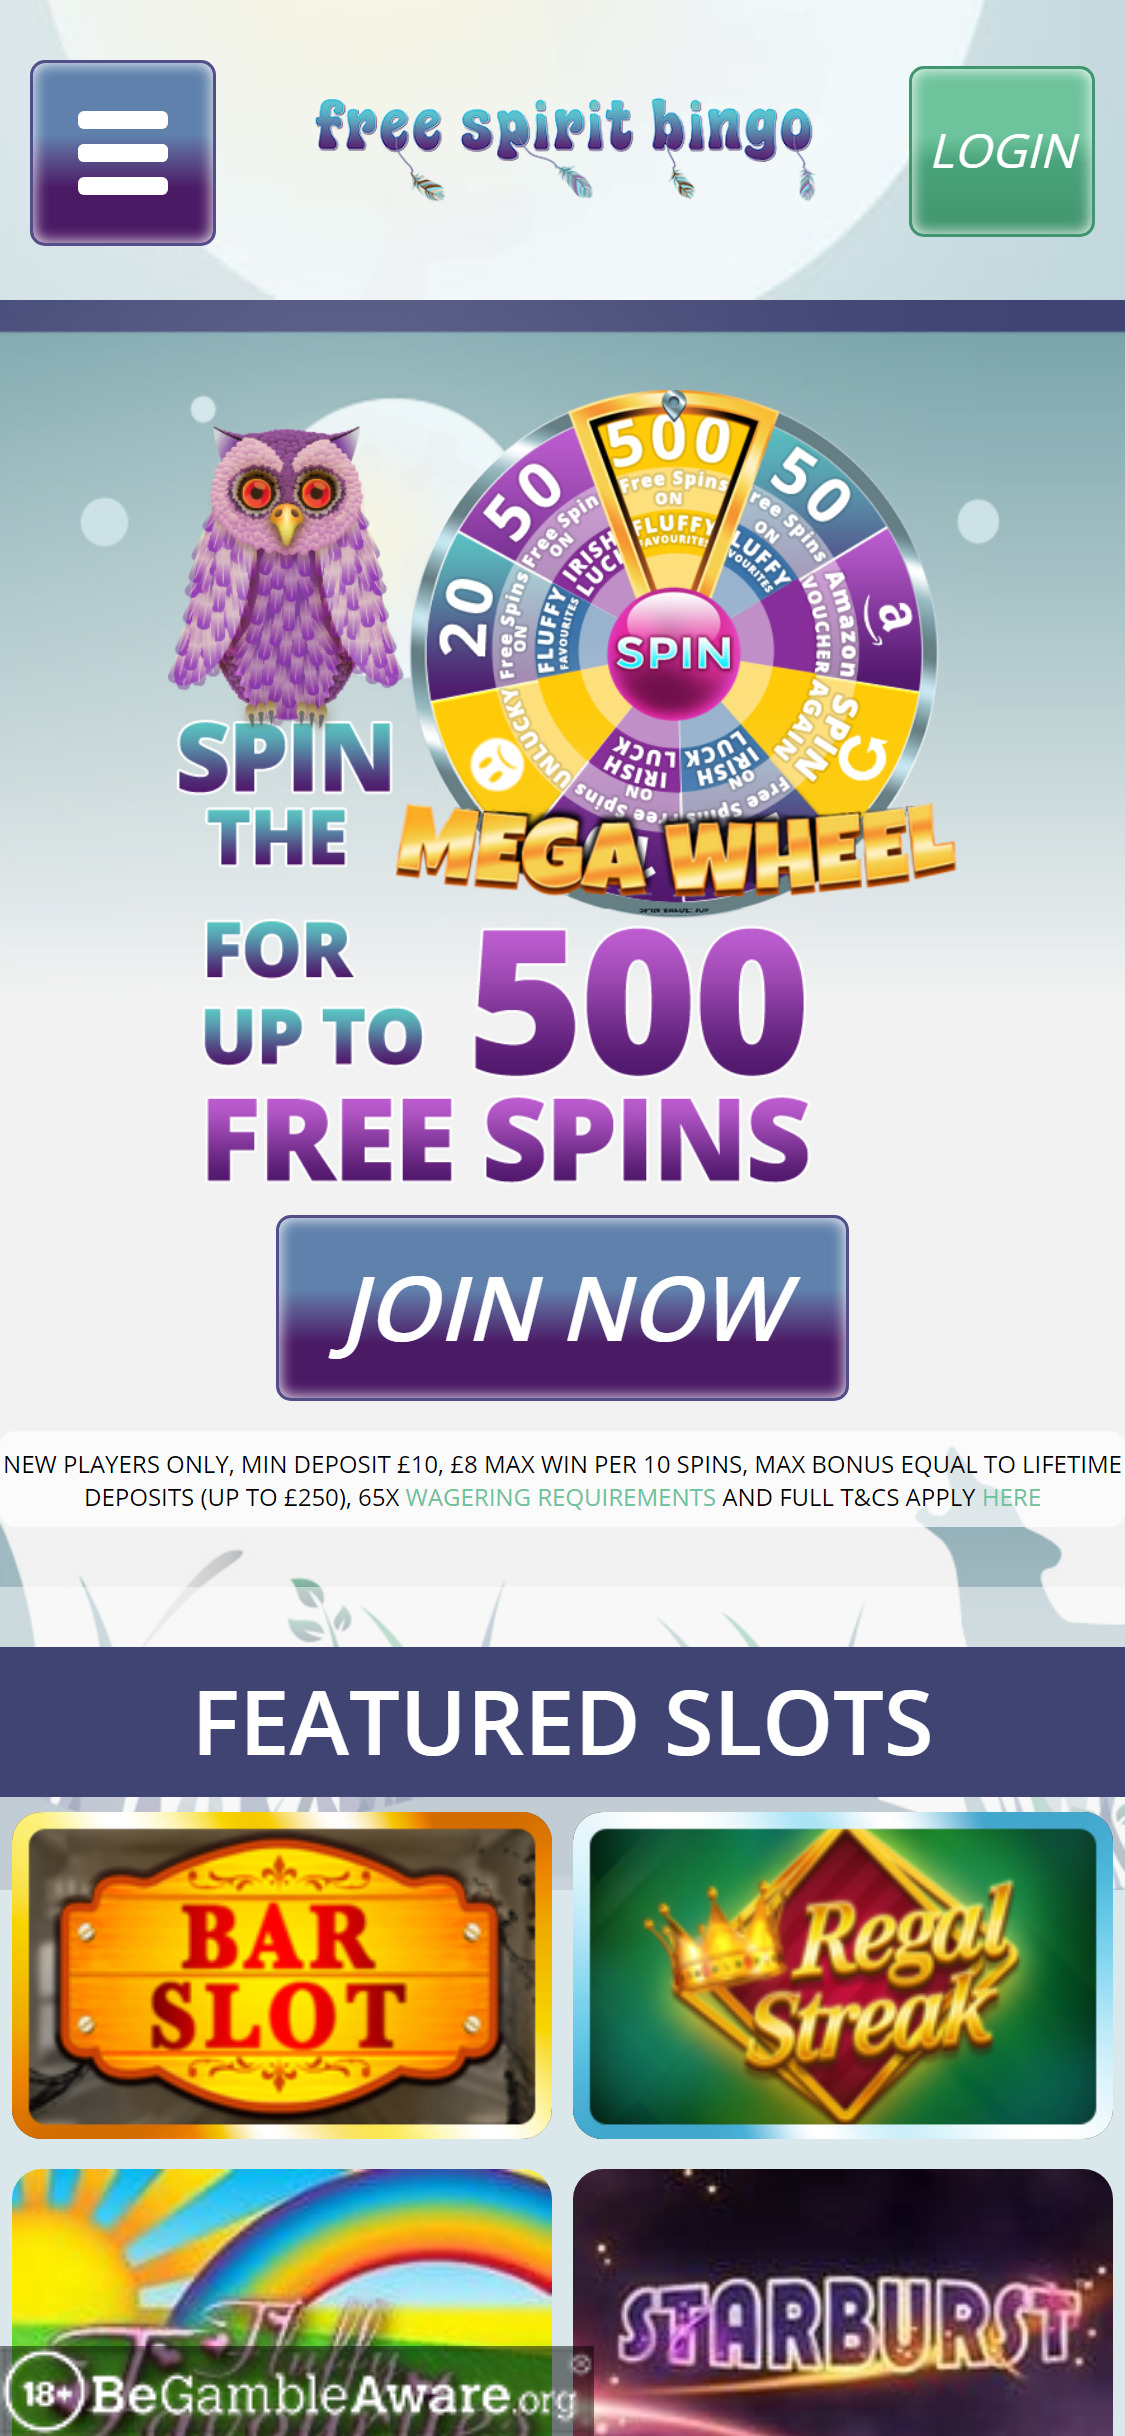 Free Spirit Bingo Casino Mobile Review